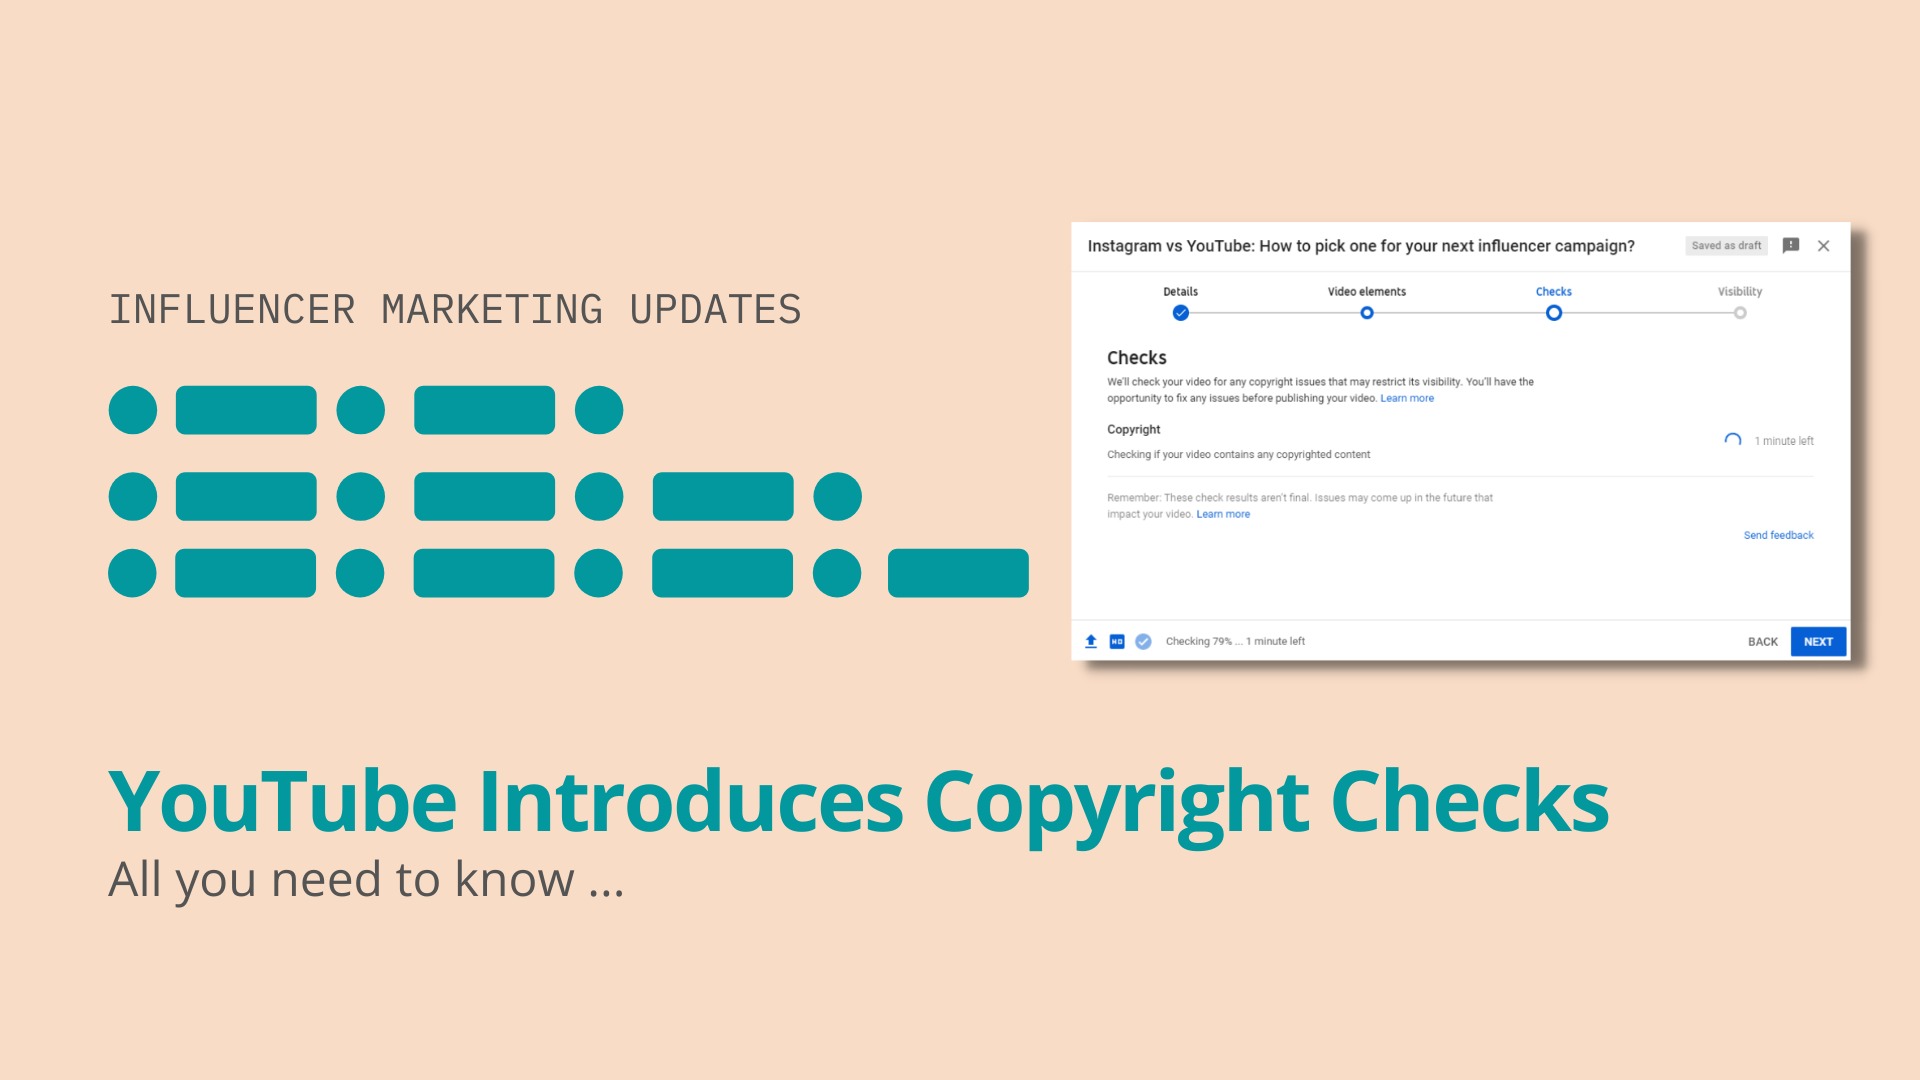 YouTube Introduces Copyright Checks image